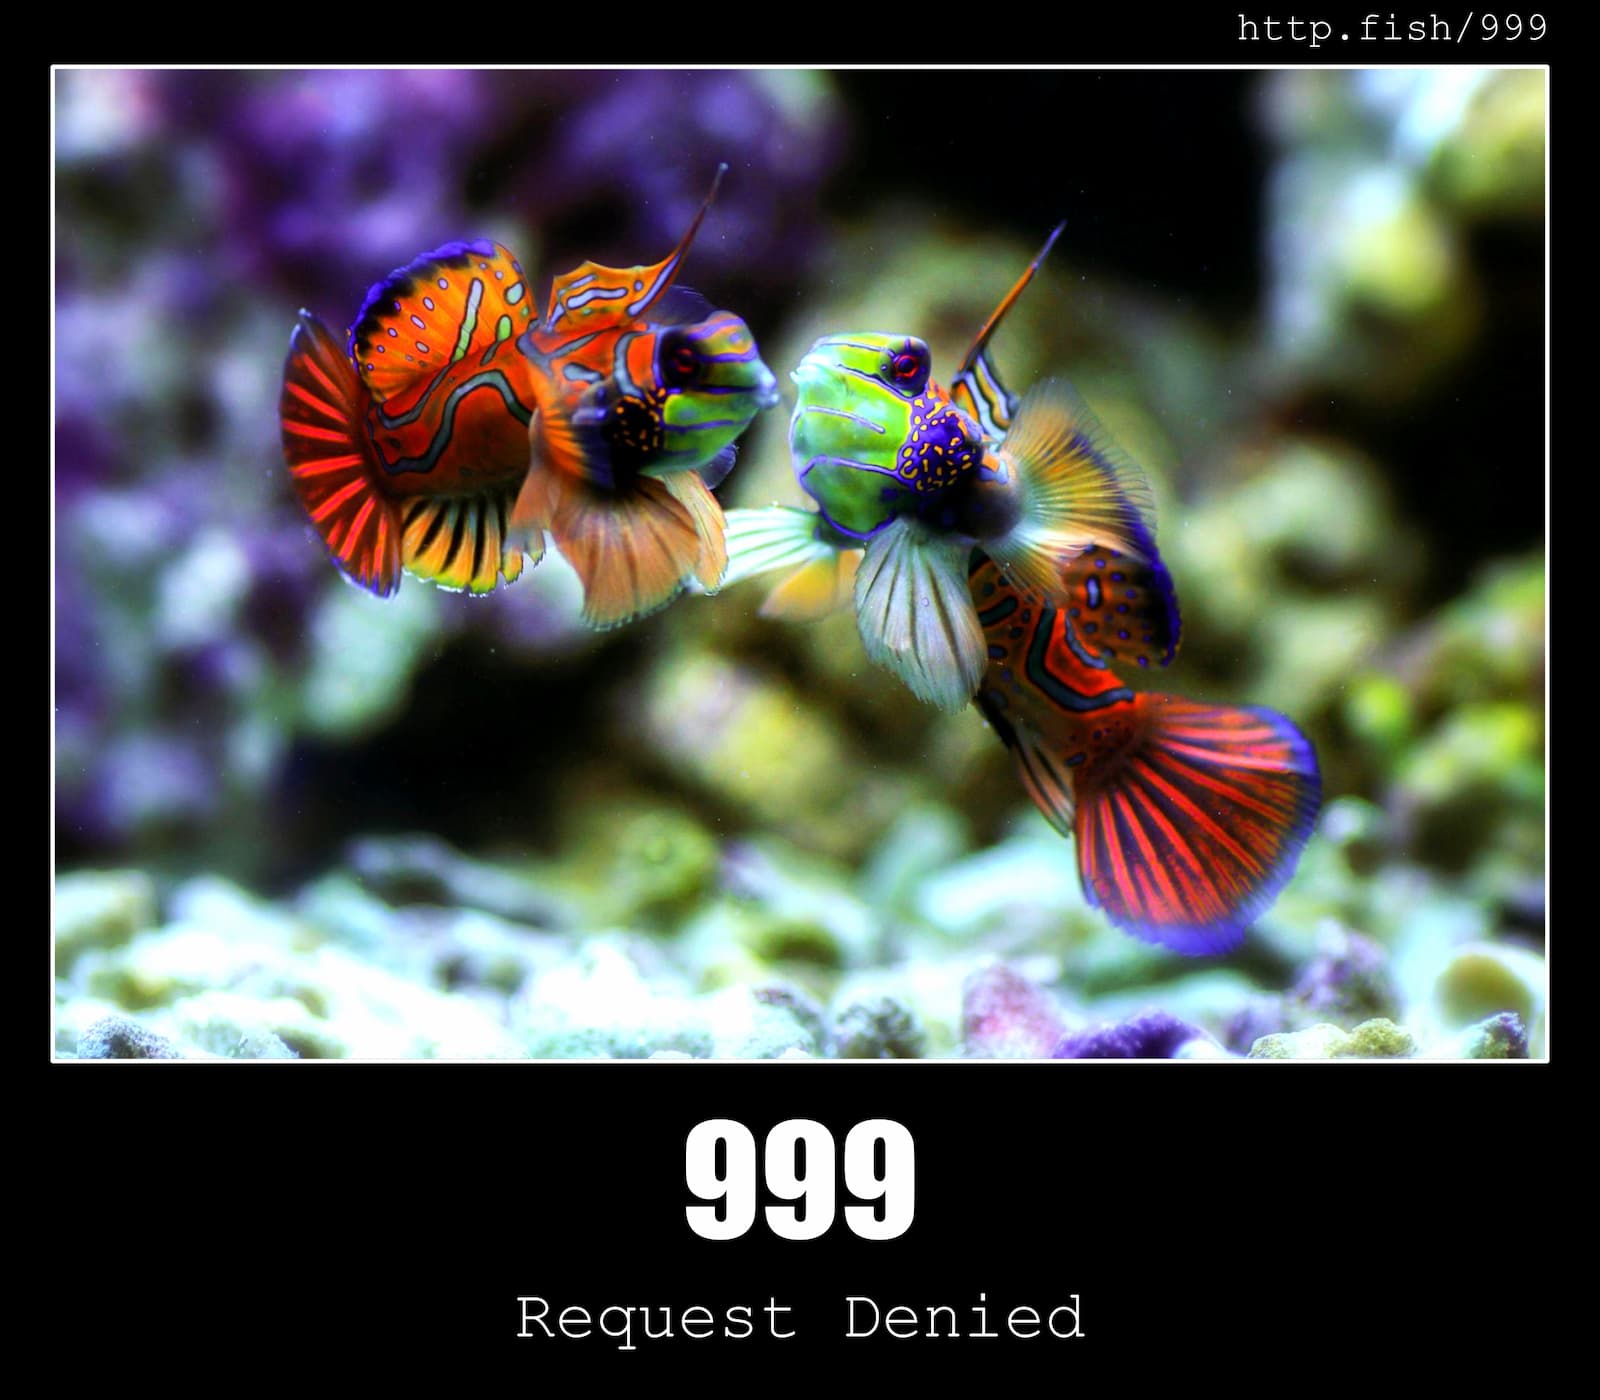 HTTP Status Code 999 Request Denied & Fish